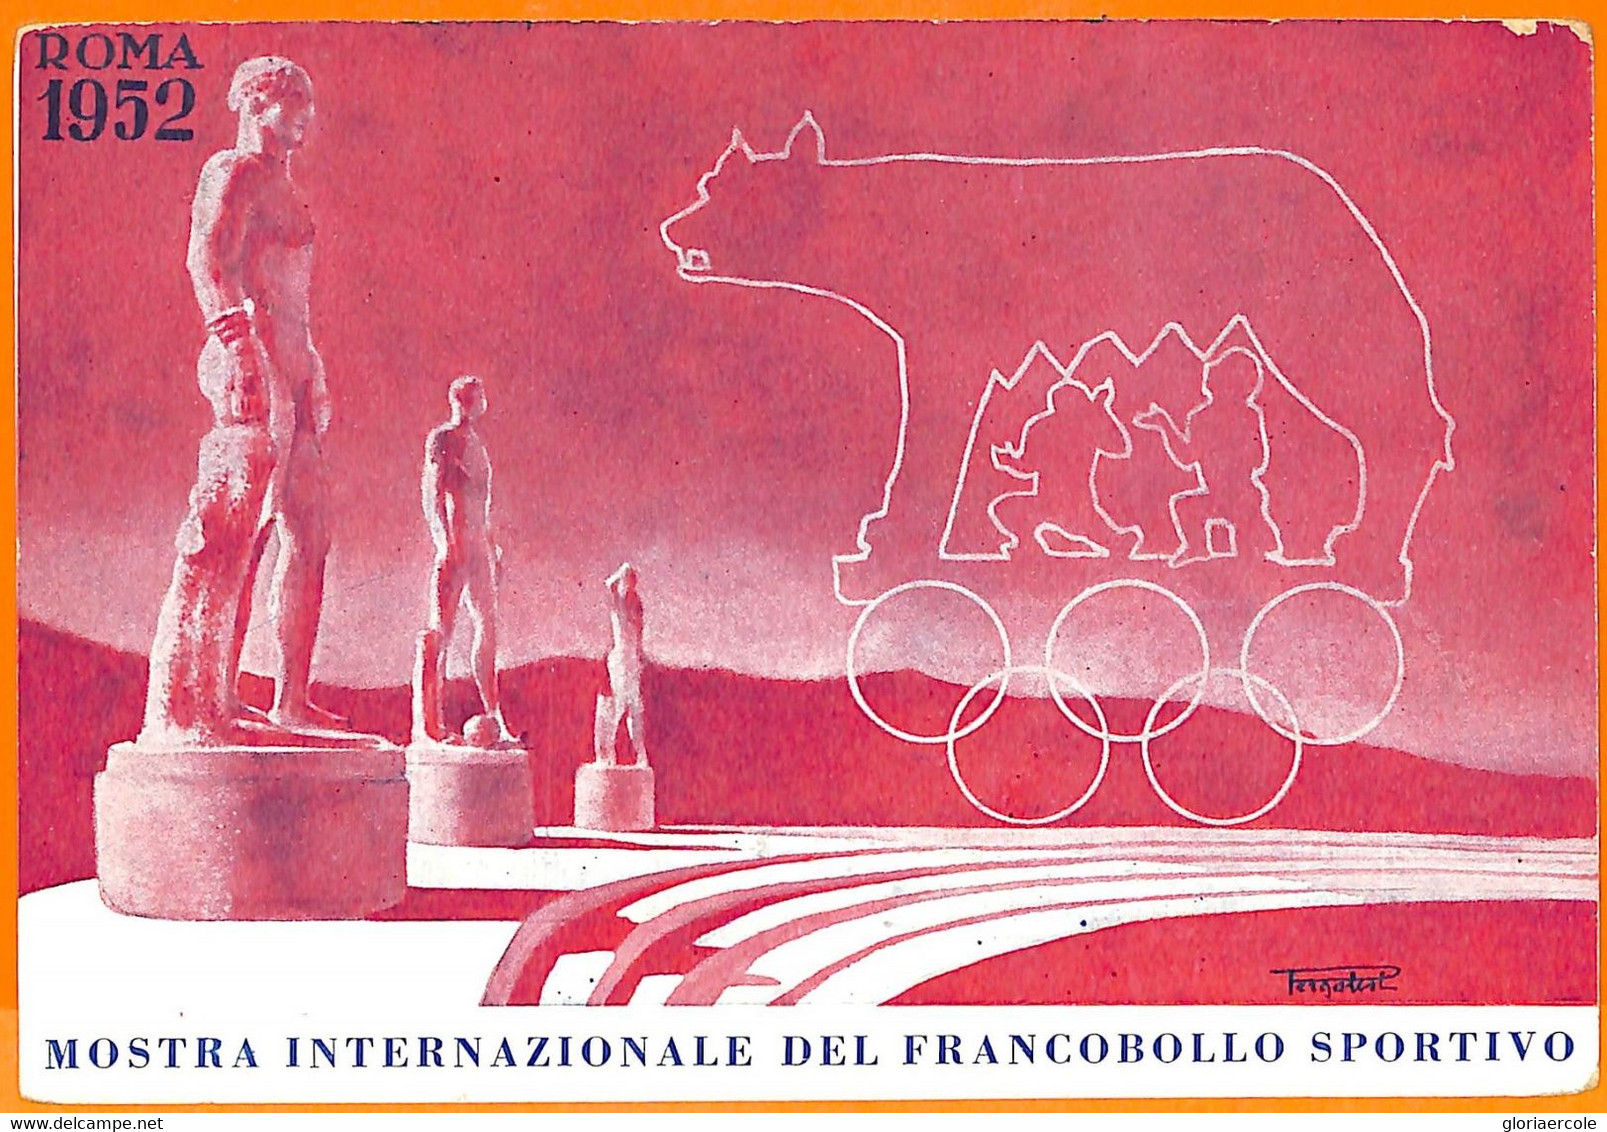 Aa2847 - Postal History - VINTAGE Illustrated CARD - 1952  Olympic Games ITALY - Estate 1952: Helsinki